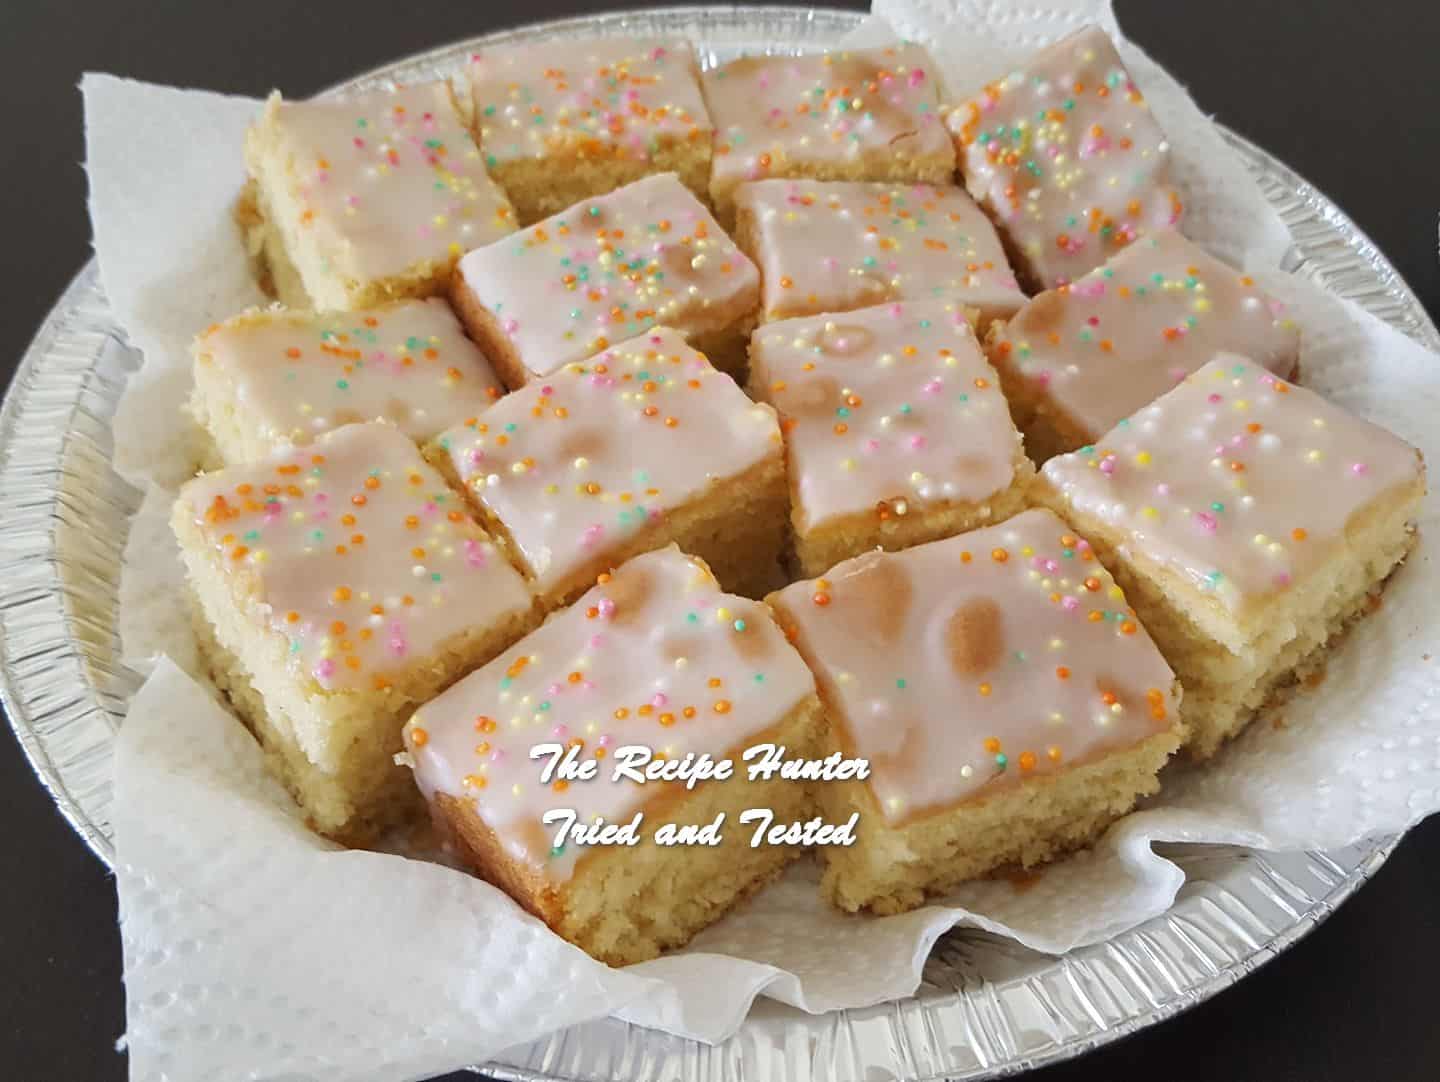 TRH Vashnee's Vanilla Sponge Cake